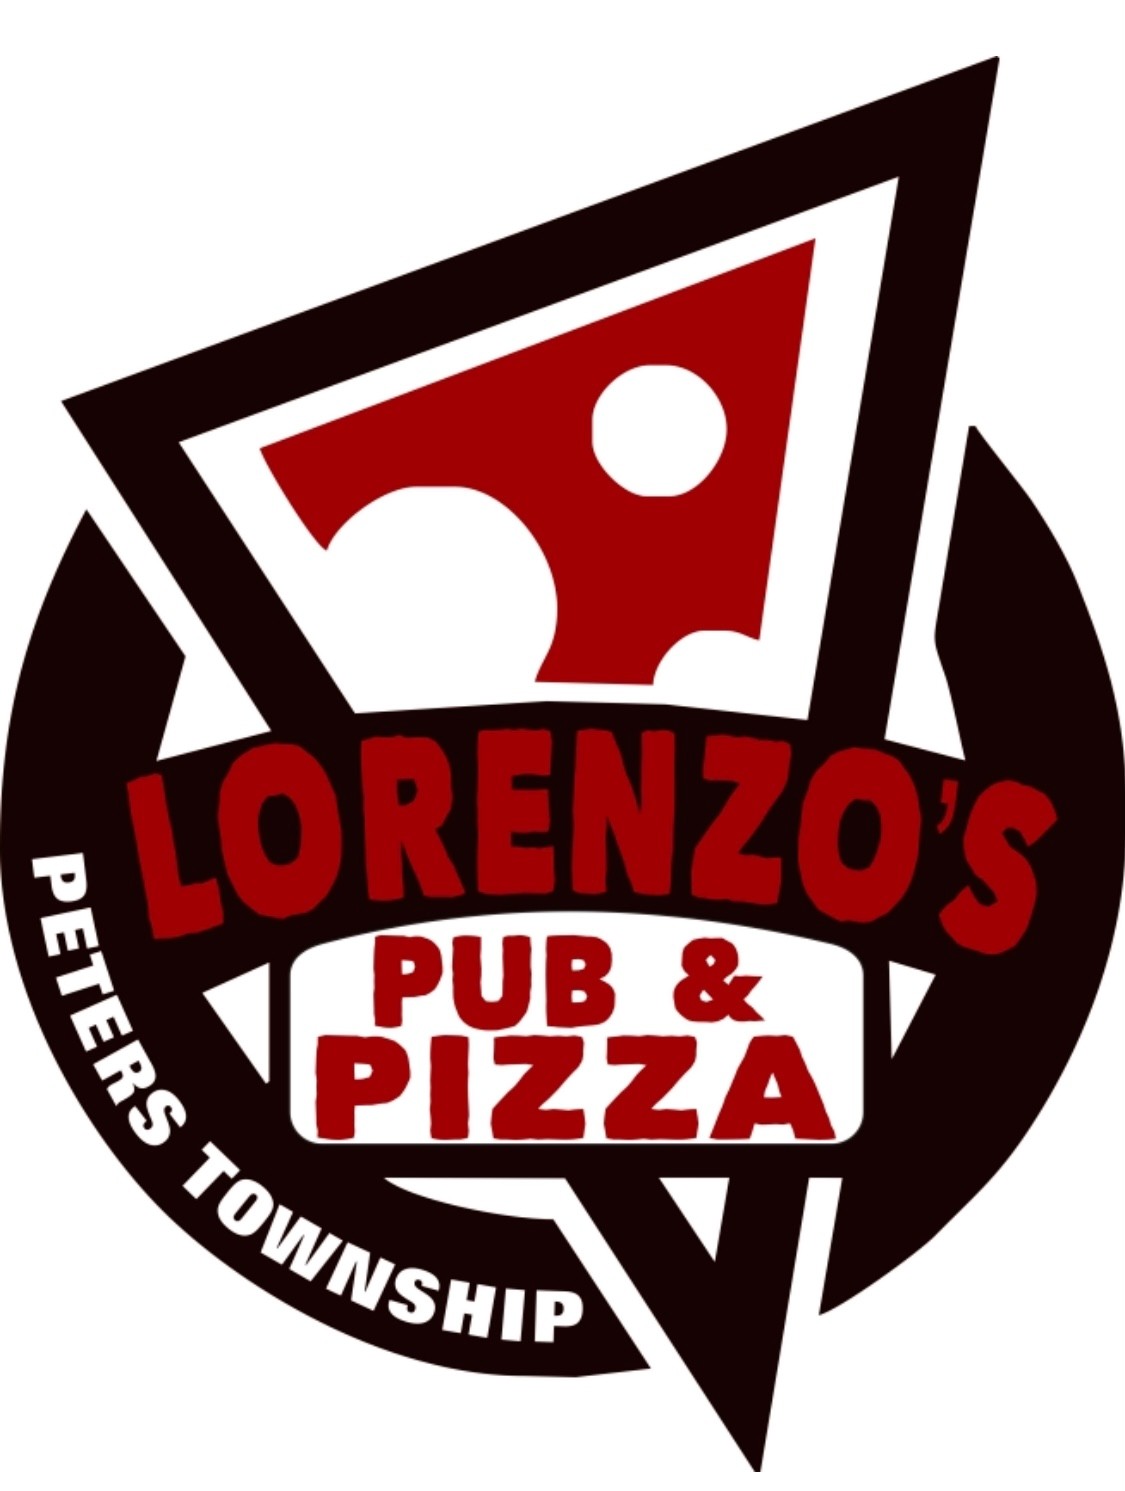 Lorenzo’s Pub & Pizza